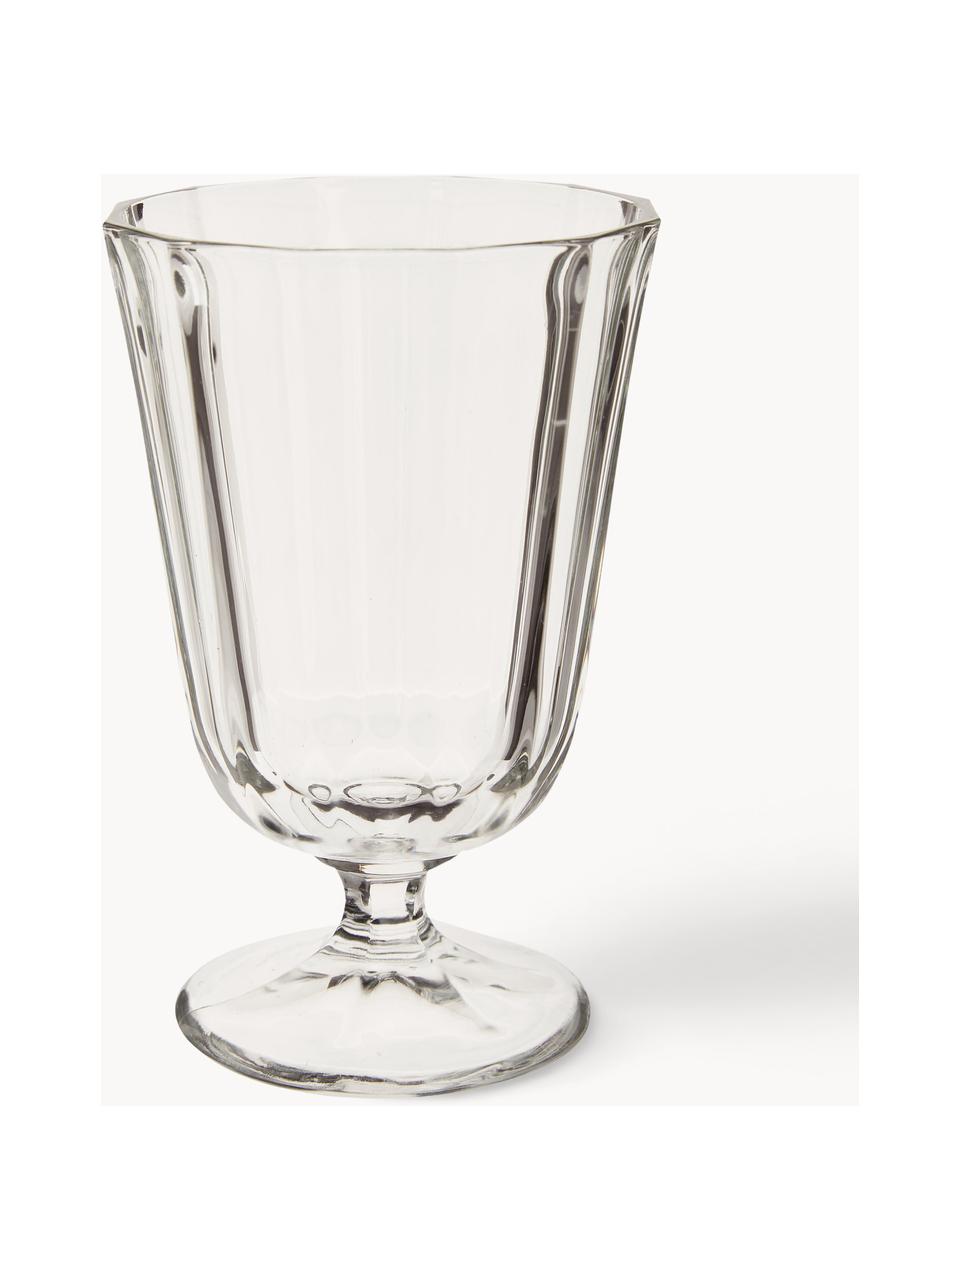 Bicchiere da vino country Ana 12 pz, Vetro, Trasparente, Ø 8 x Alt. 12 cm, 195 ml